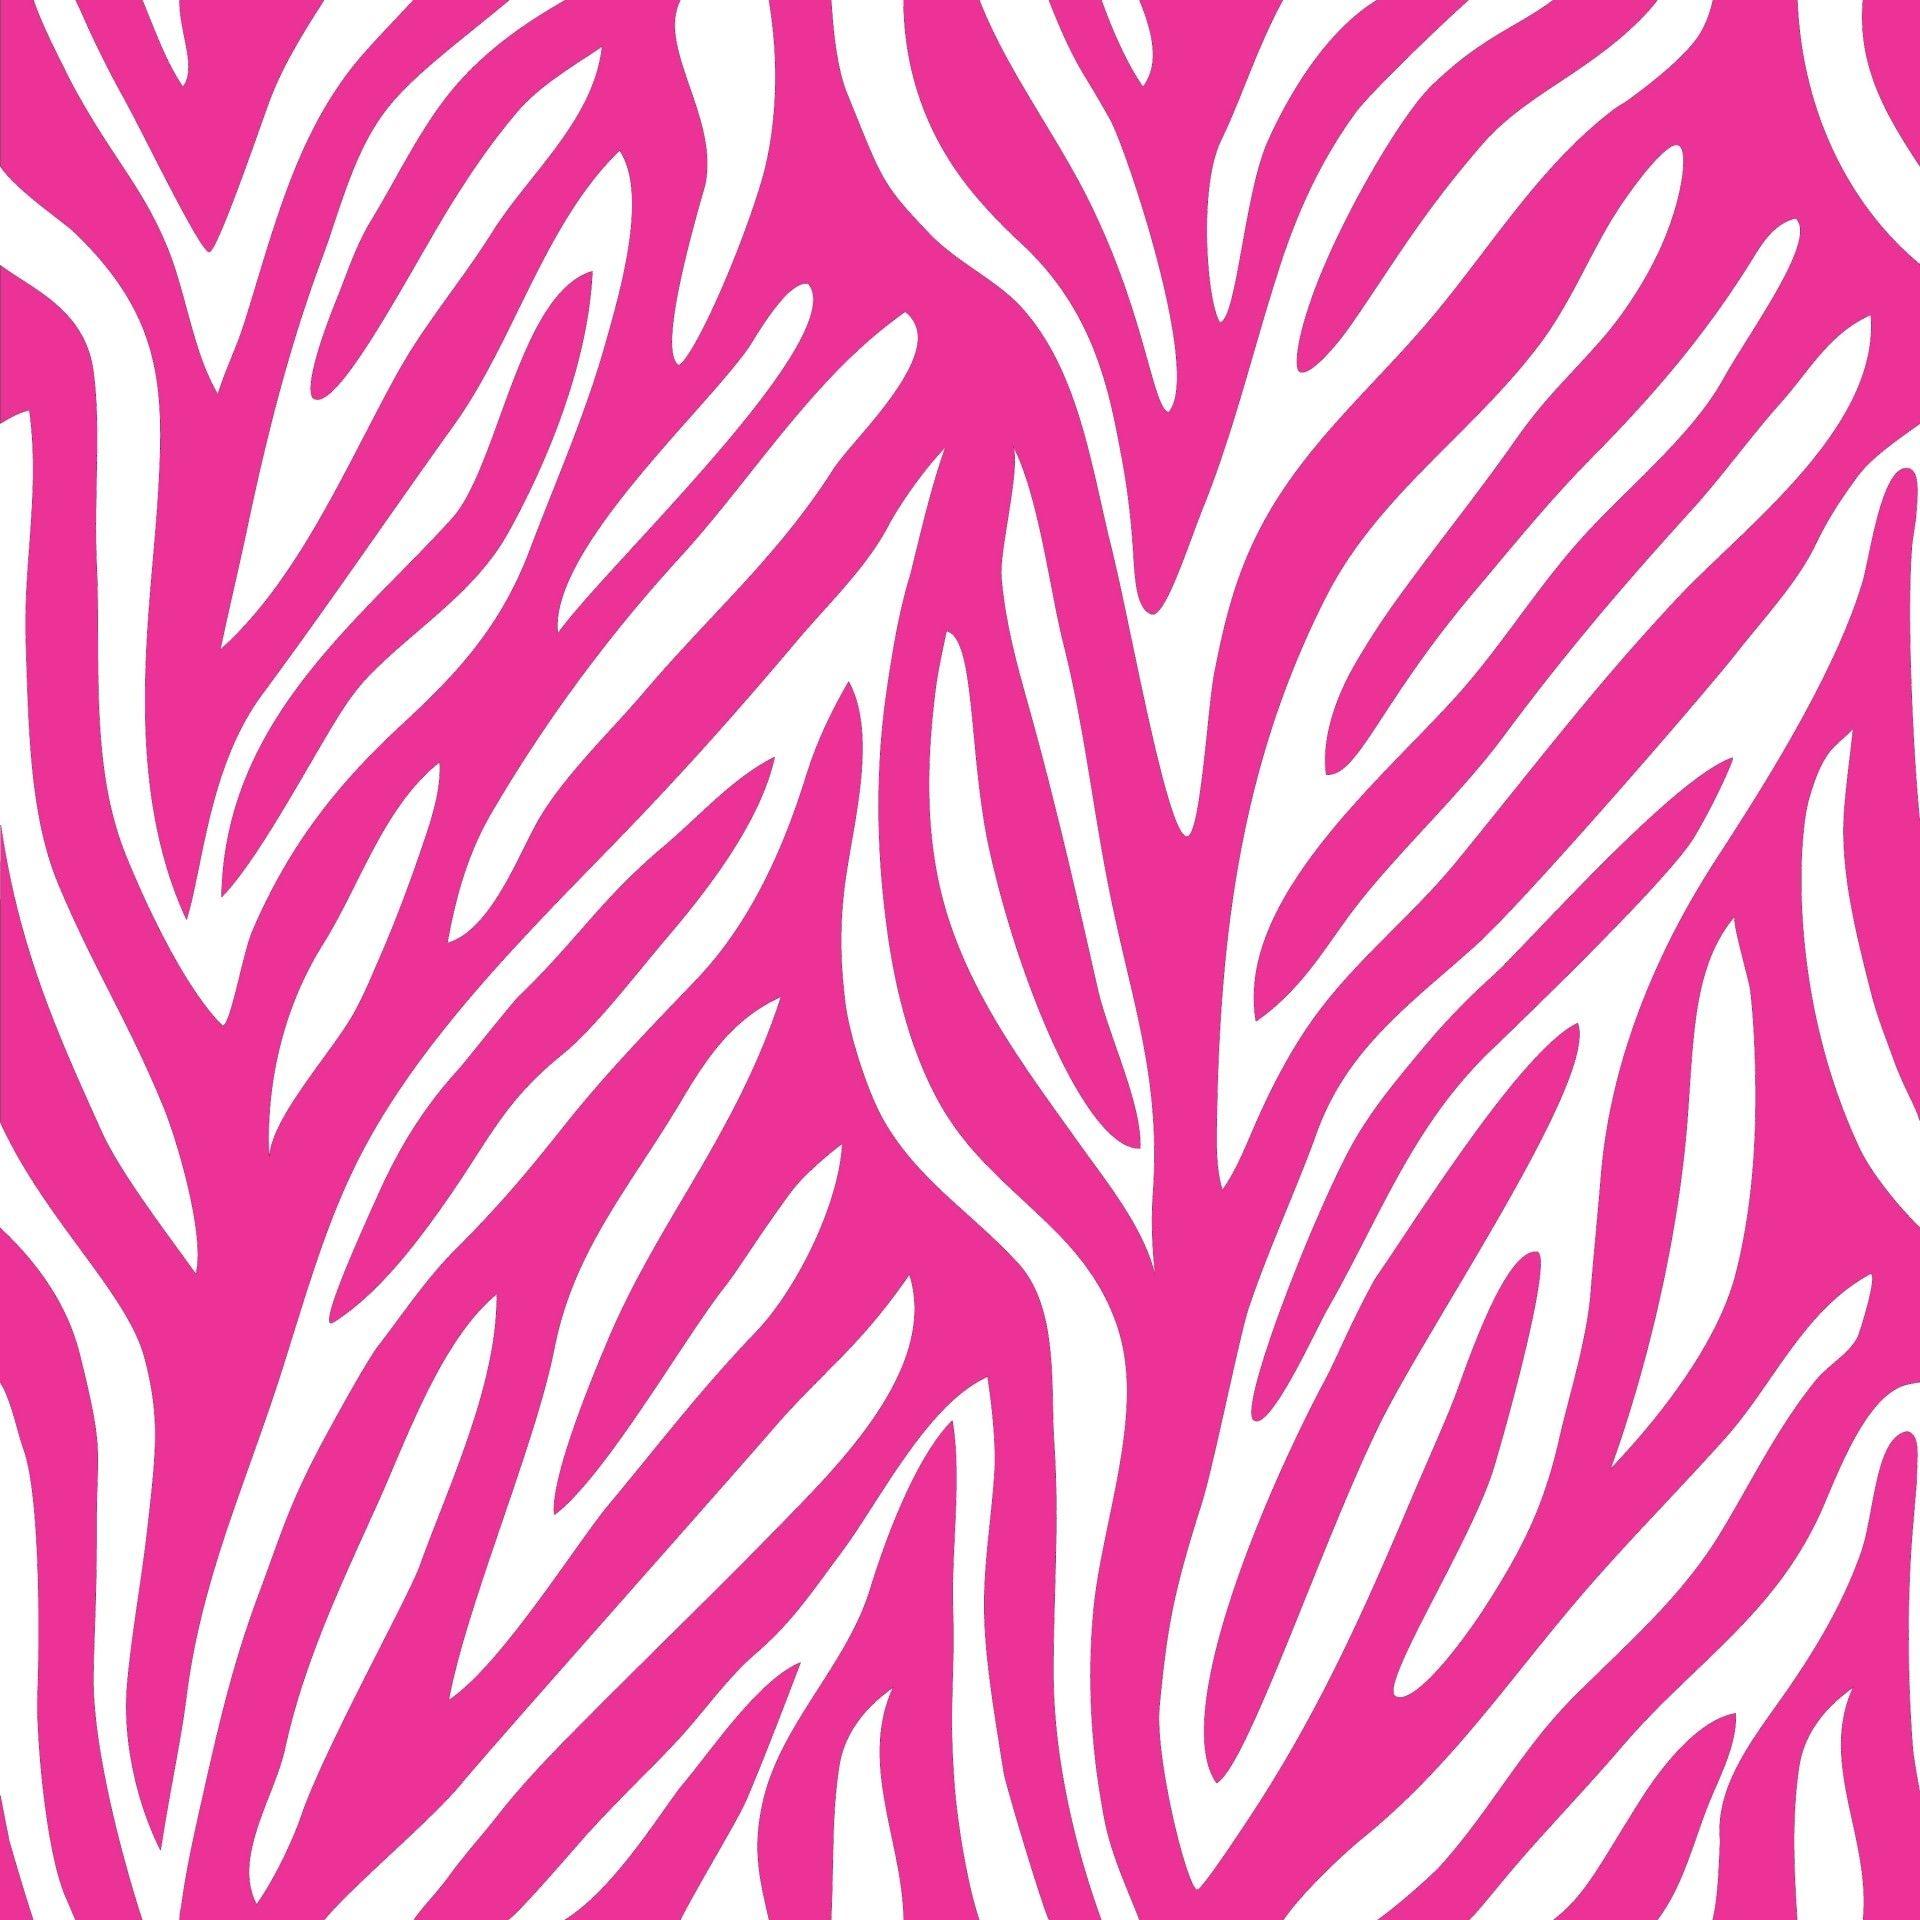 Victoria Secret I Love Pink Wallpaper free download in HD